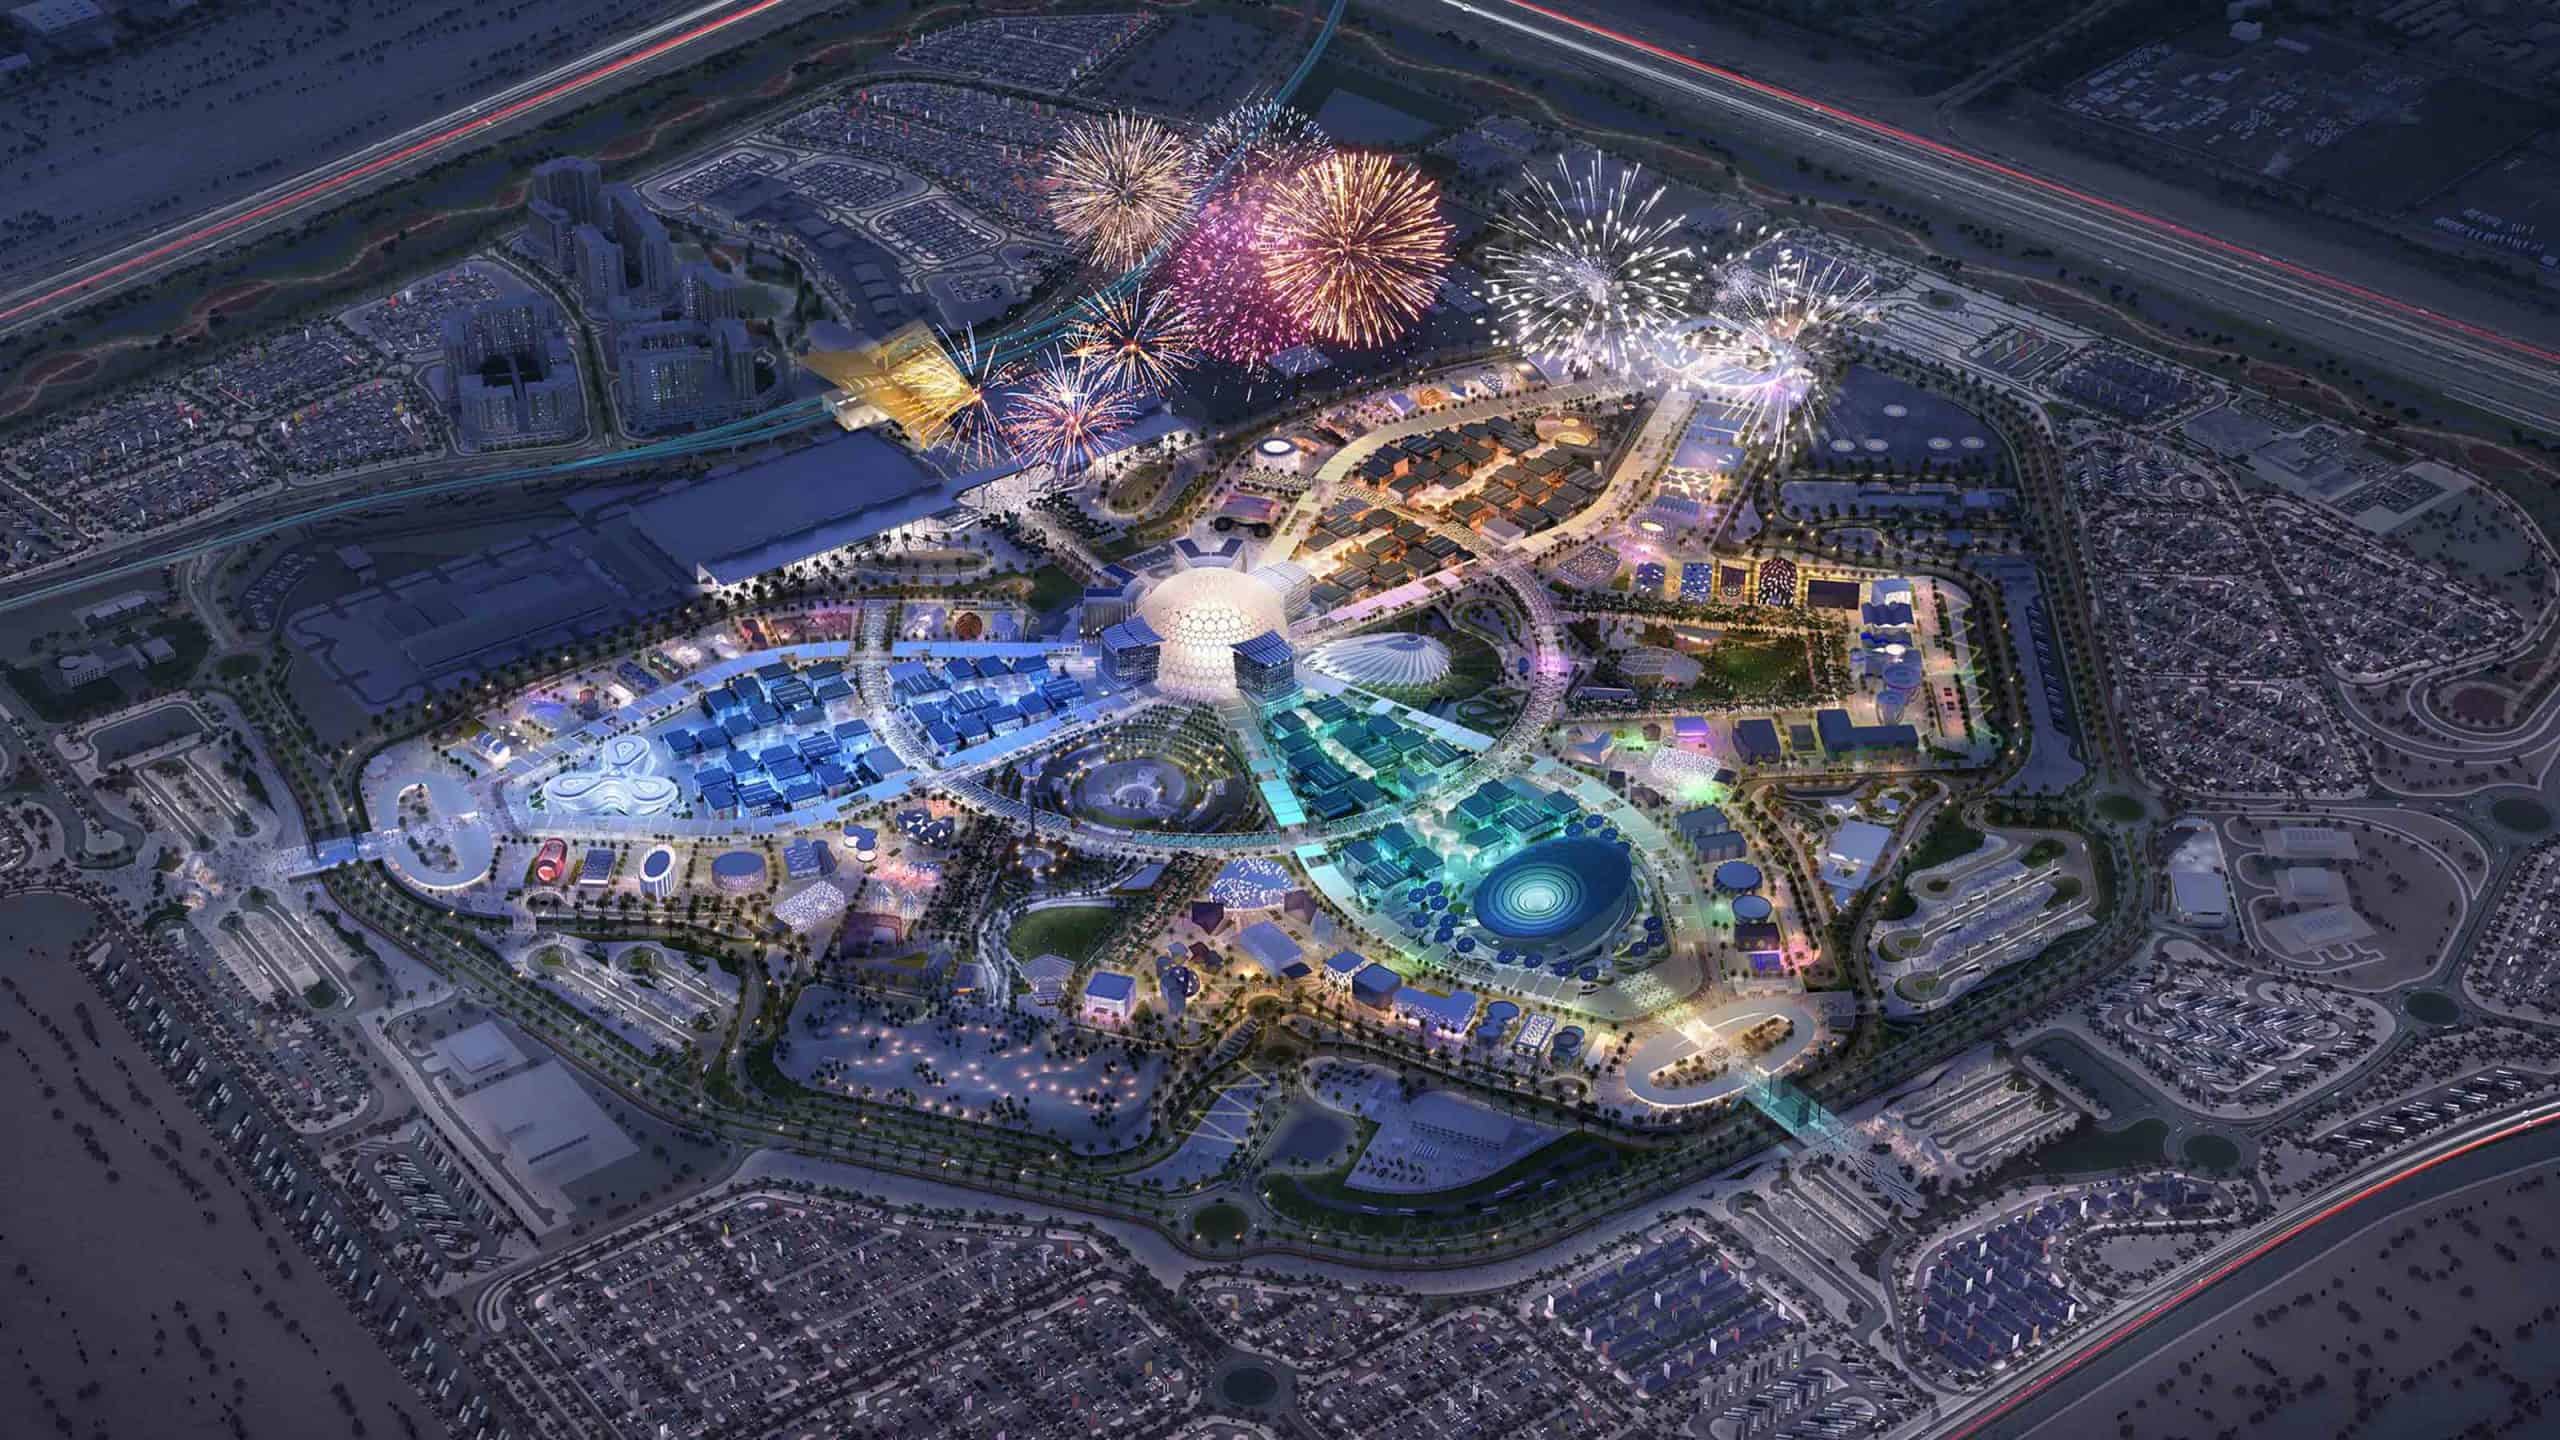 Will Dubai Expo 2020 Have the Economic Impact the UAE Hopes For?